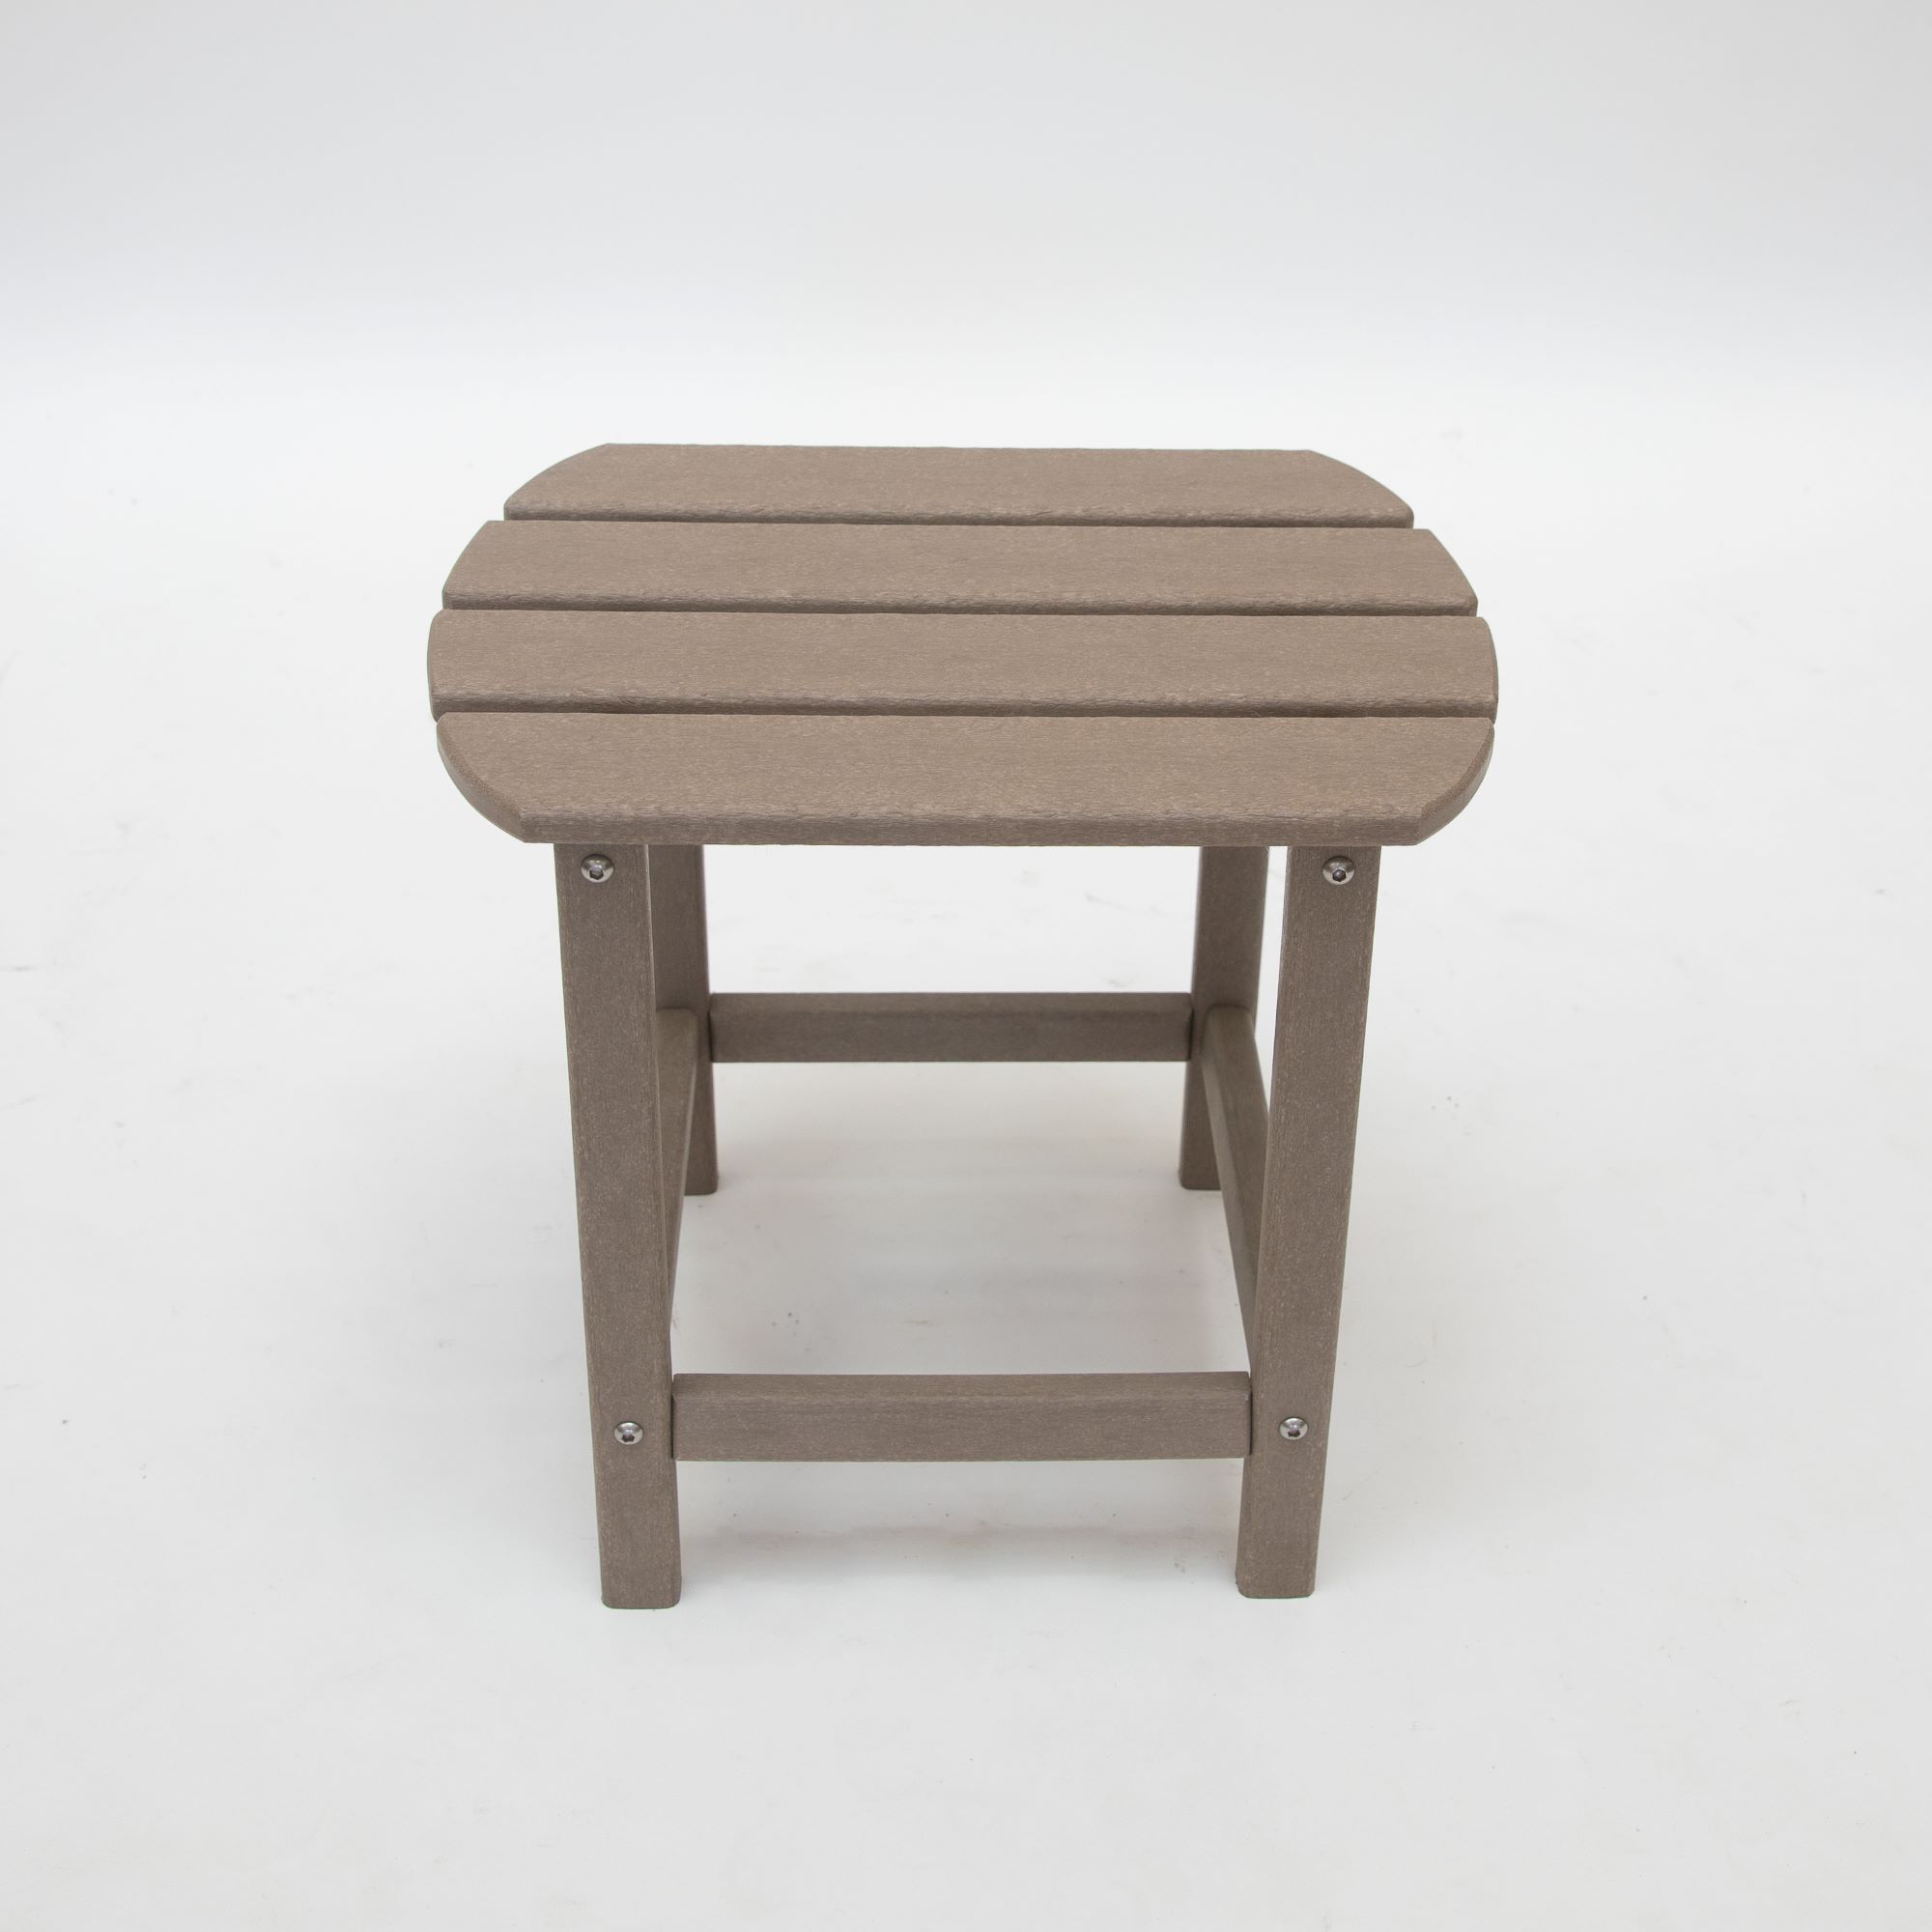 Corona 18" Recycled Plastic Side Table - Weathered Wood - image 2 of 6